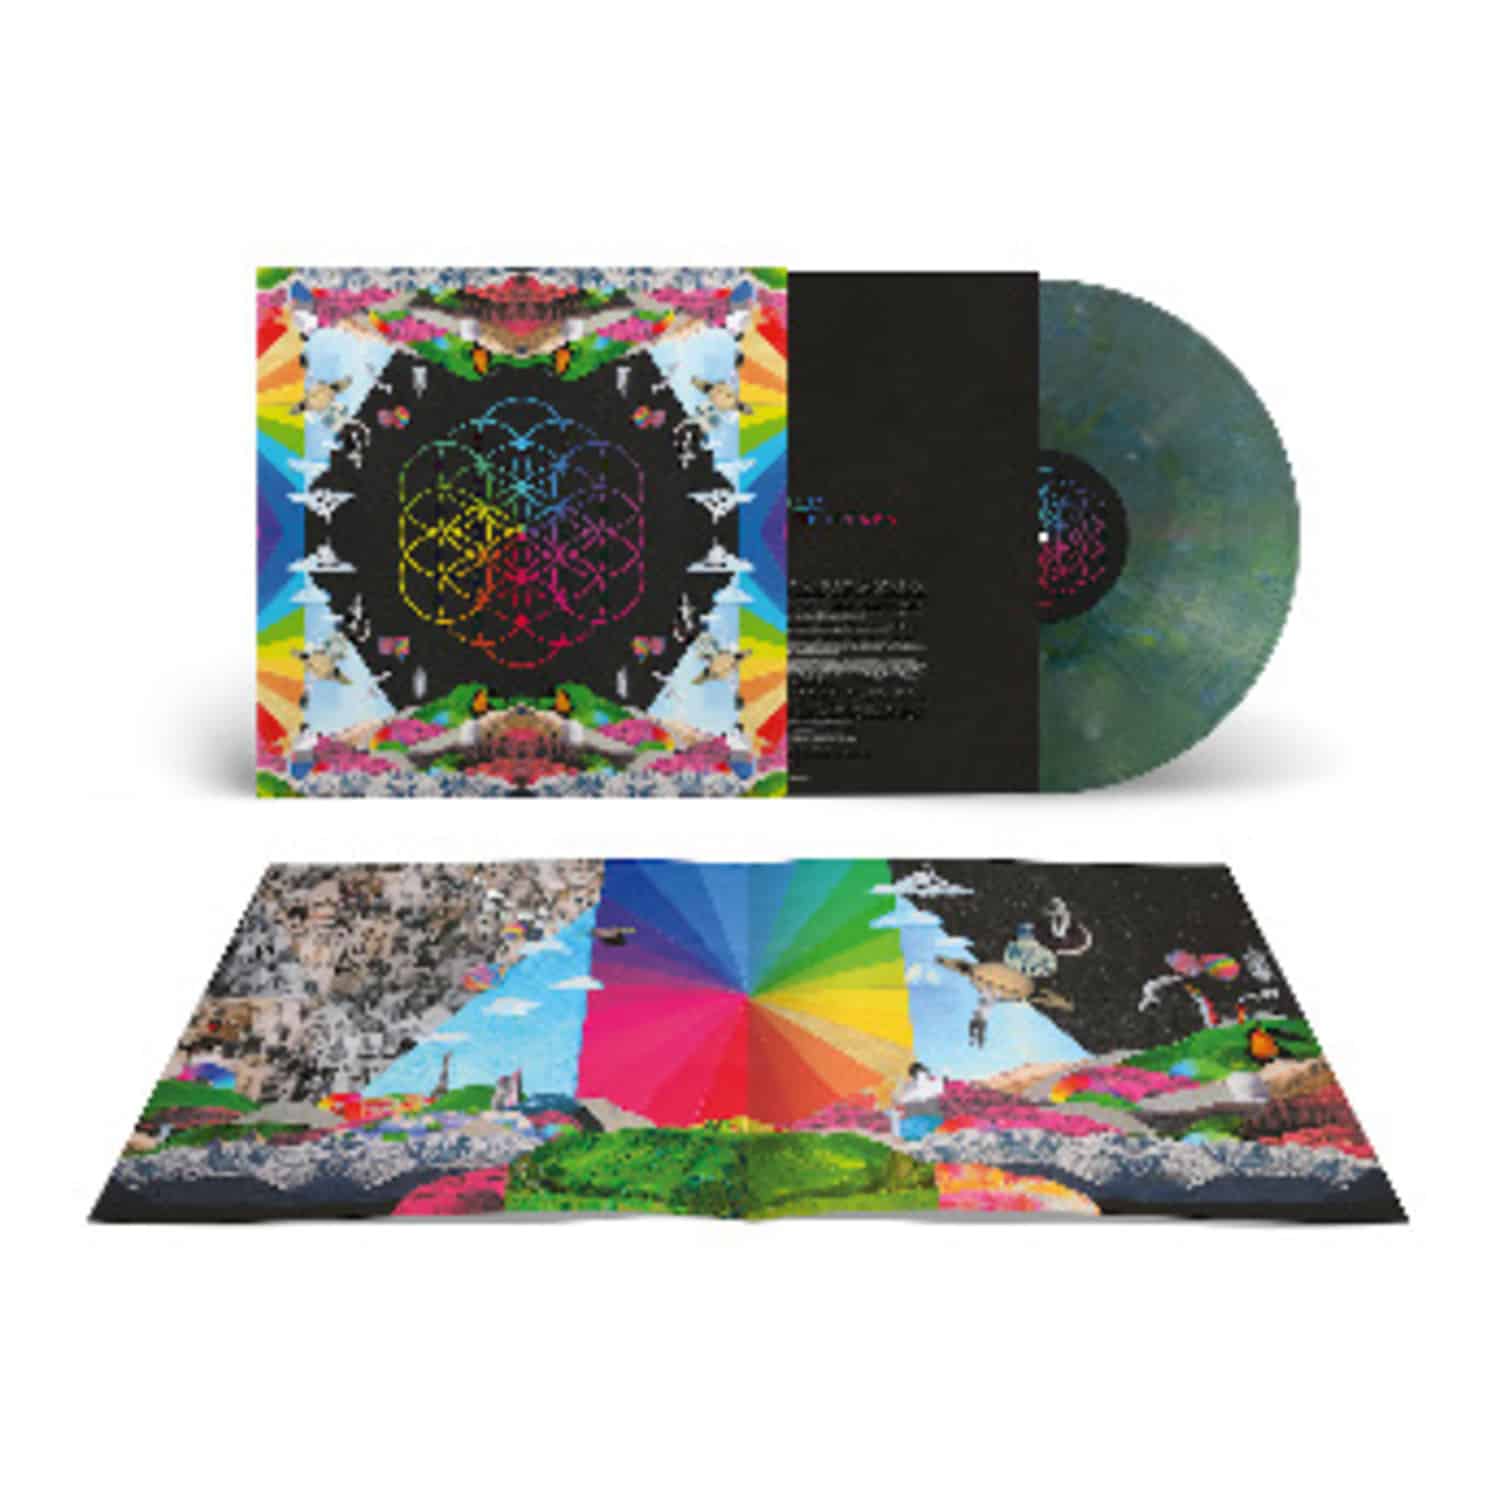 Coldplay - A HEAD FULL OF DREAMS 